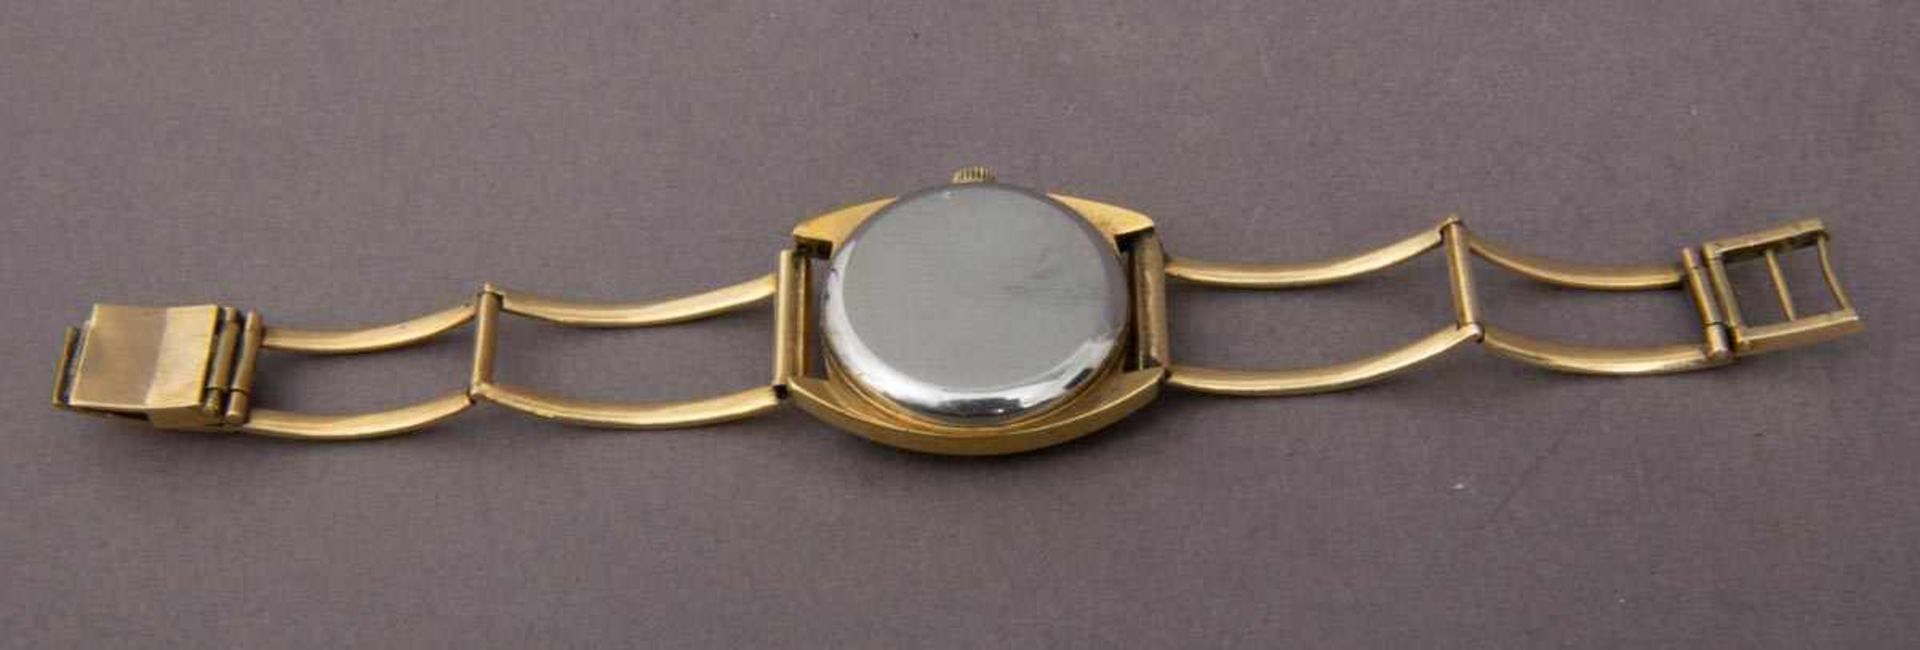 Omega De Ville Herrenarmbanduhr mit 585er Gelbgold-Armband (ca. 20 gr). Handaufzug mit - Image 5 of 7